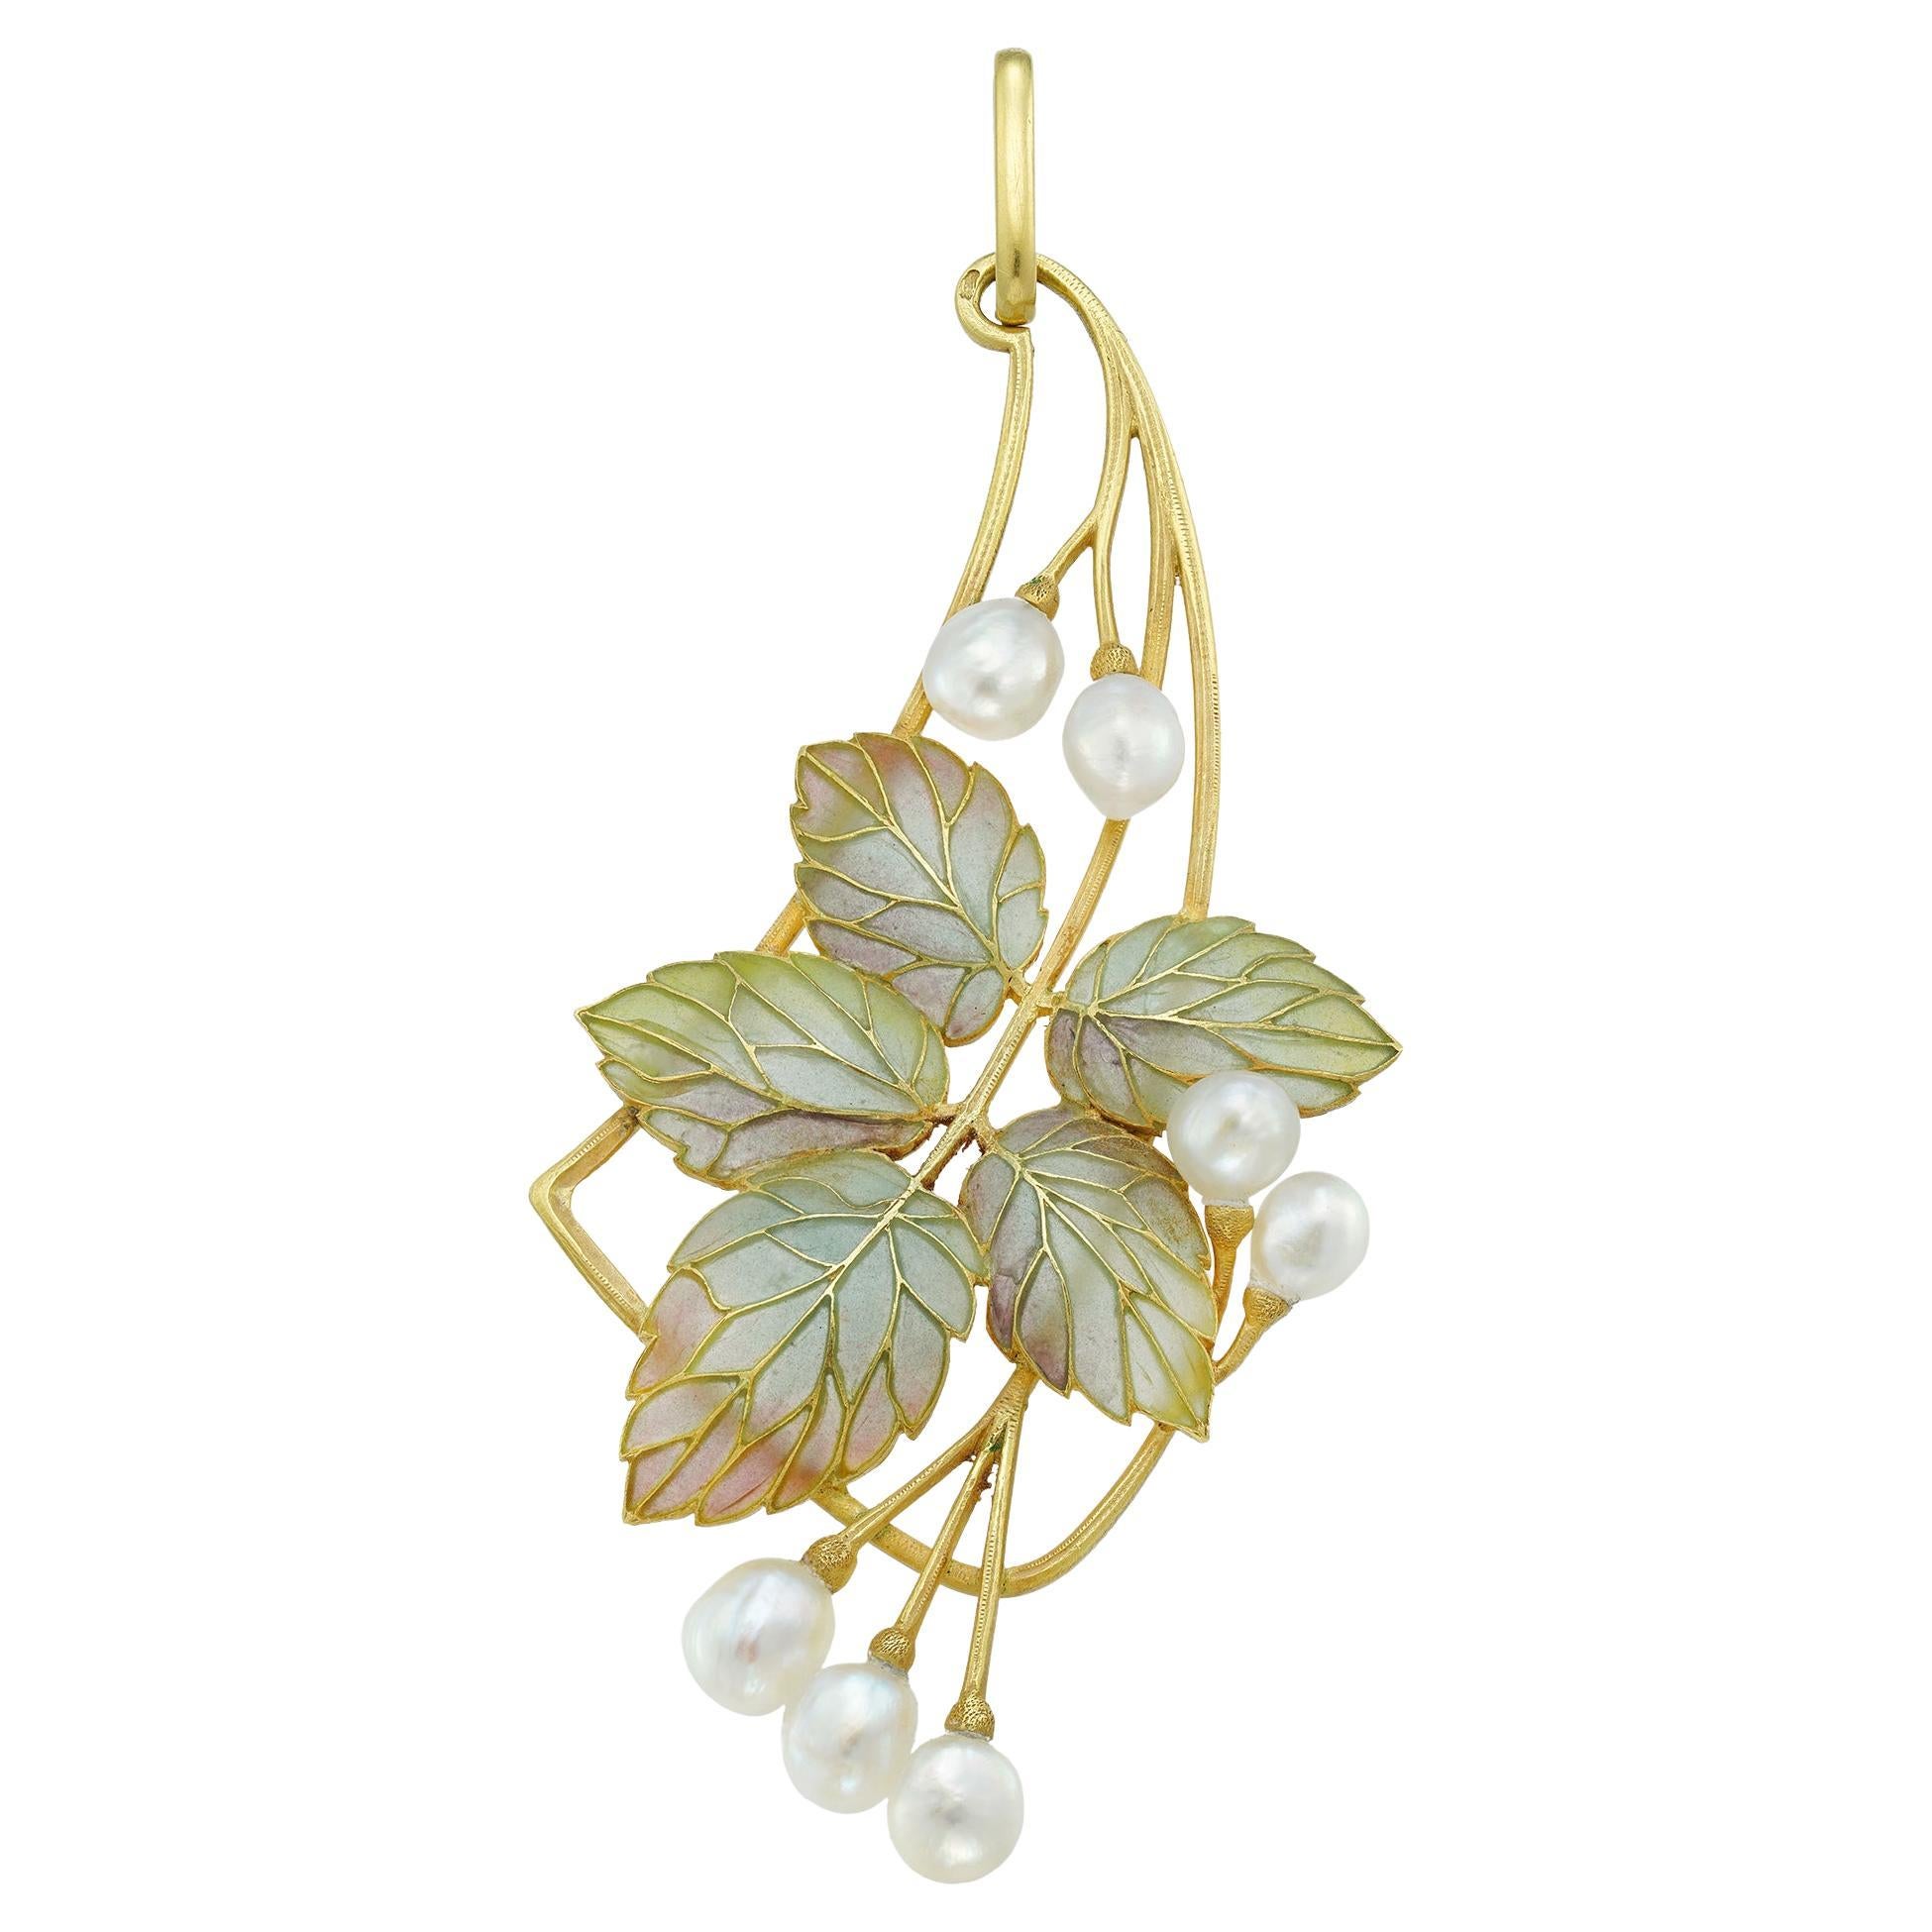 An Art Nouveau Enamel And Pearl Pendant By Falize For Sale